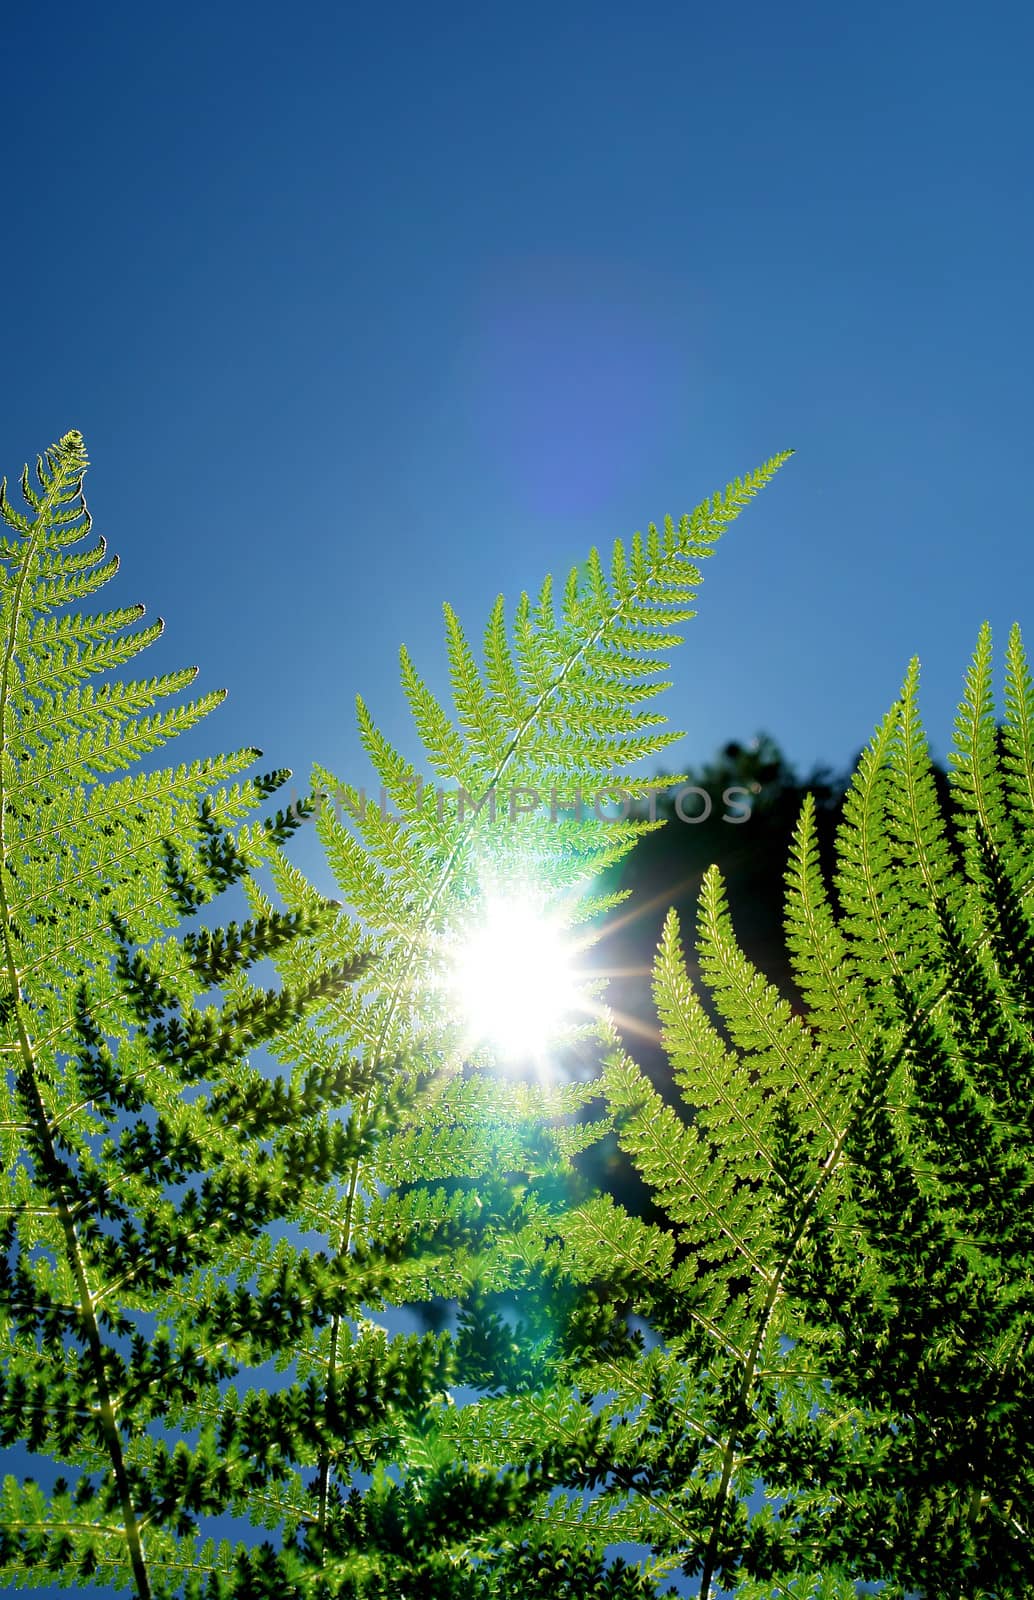 Fern leaf detail in sunlight background by ptxgarfield